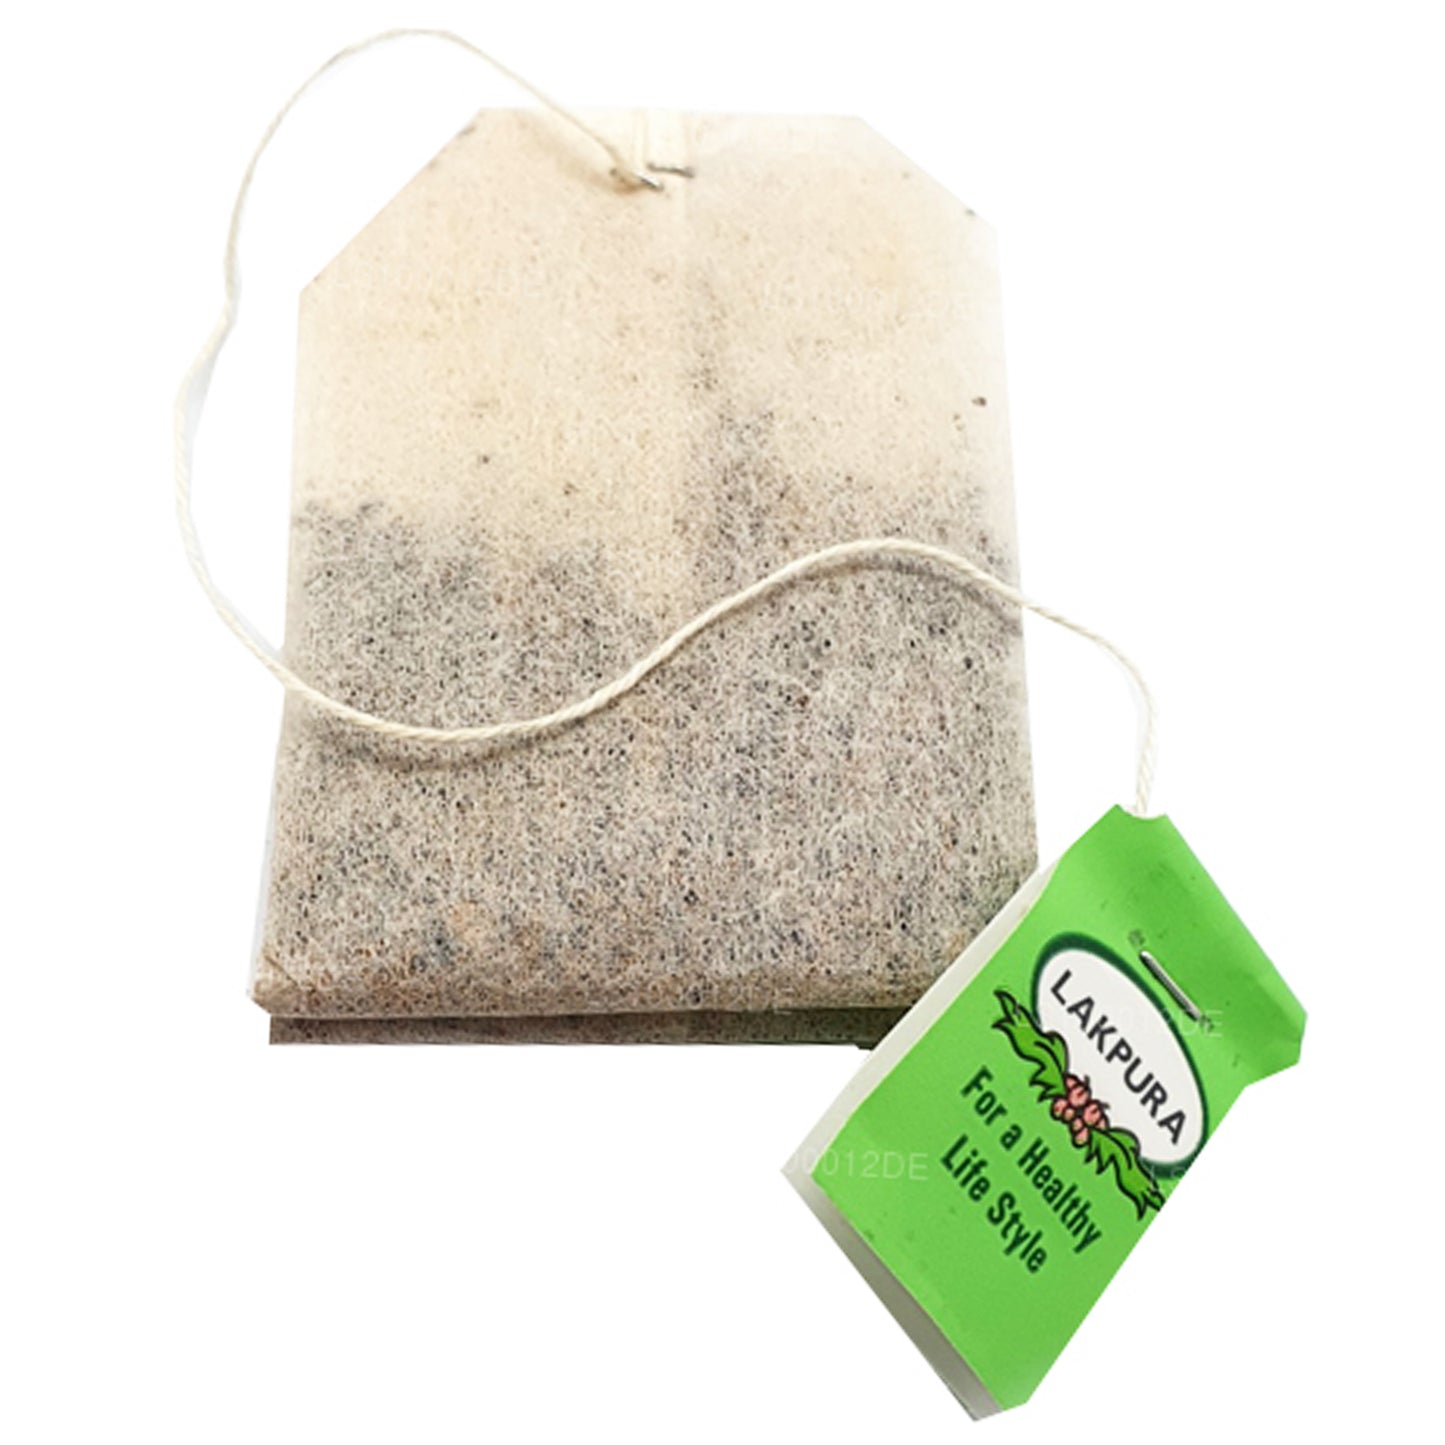 Lakpura Goraka Herbal Tea (40g) 30 Tea Bags